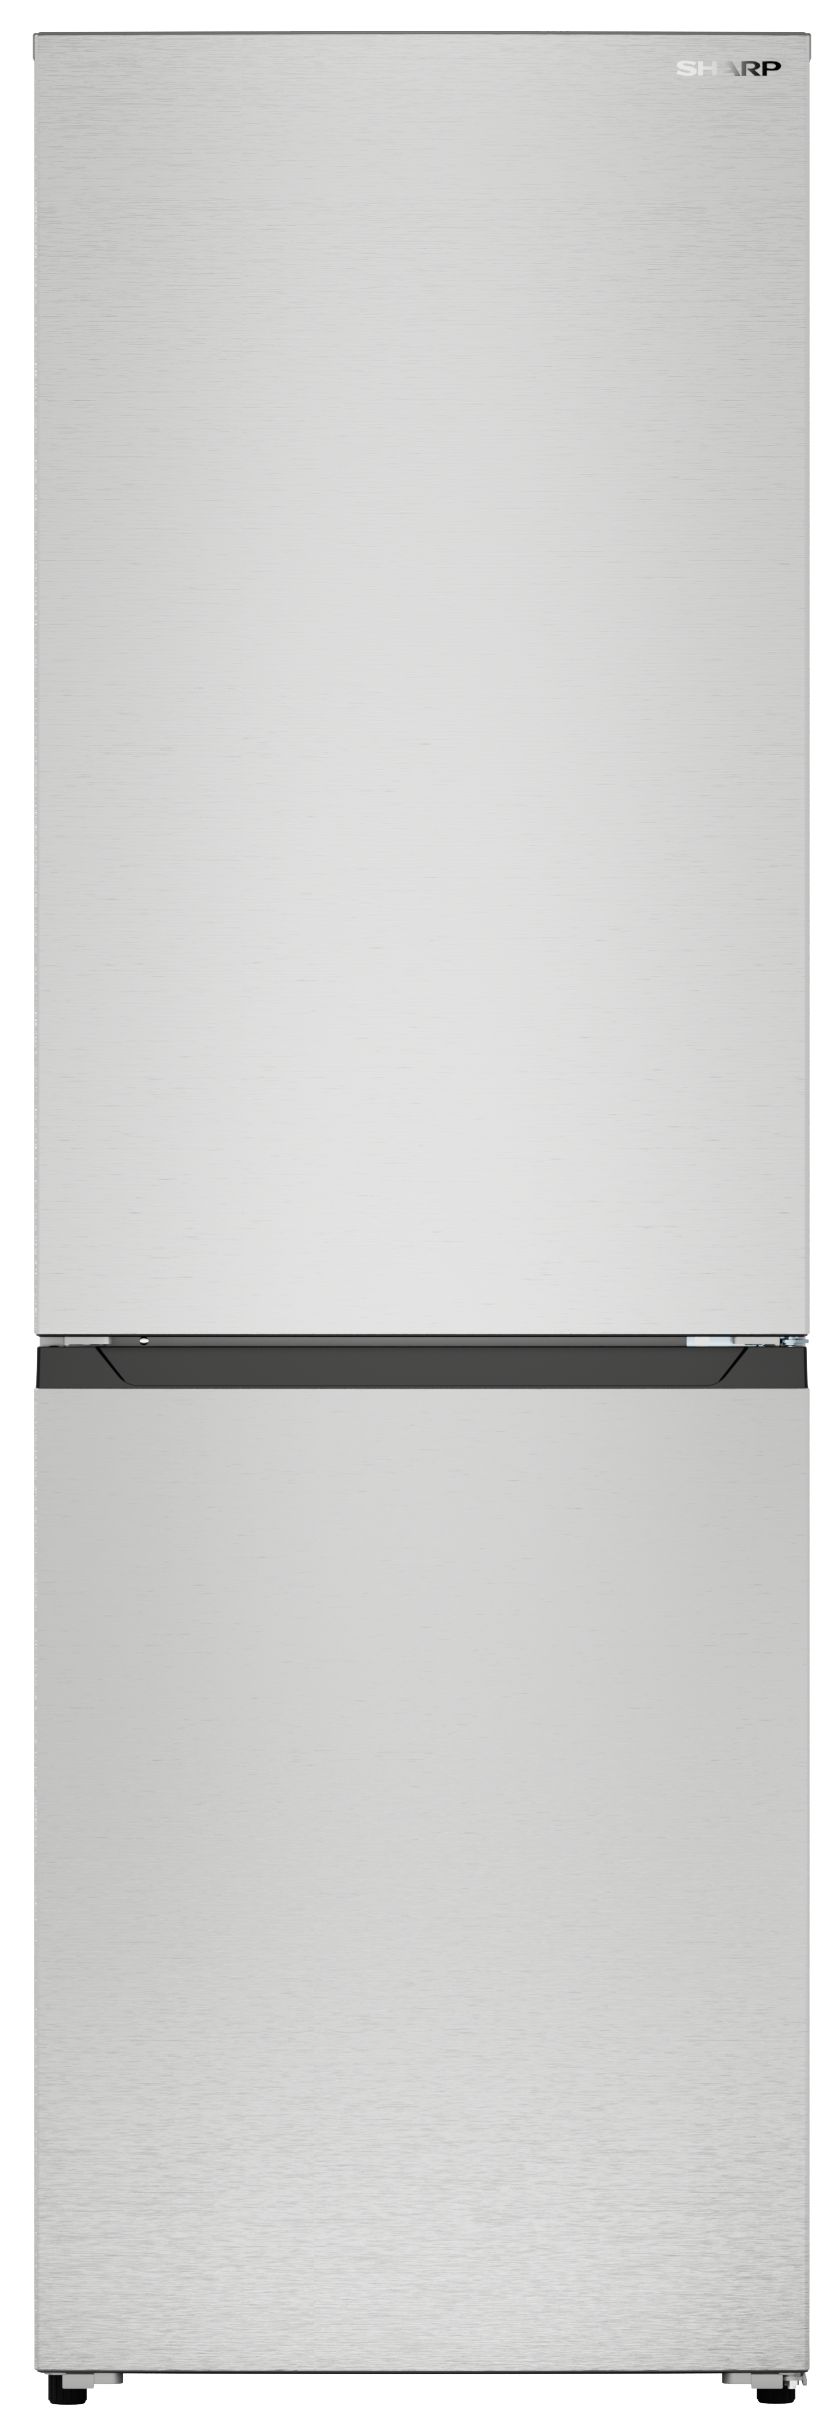 Sharp Appliances, Refrigerators, Washers and Dryers, Electronics 